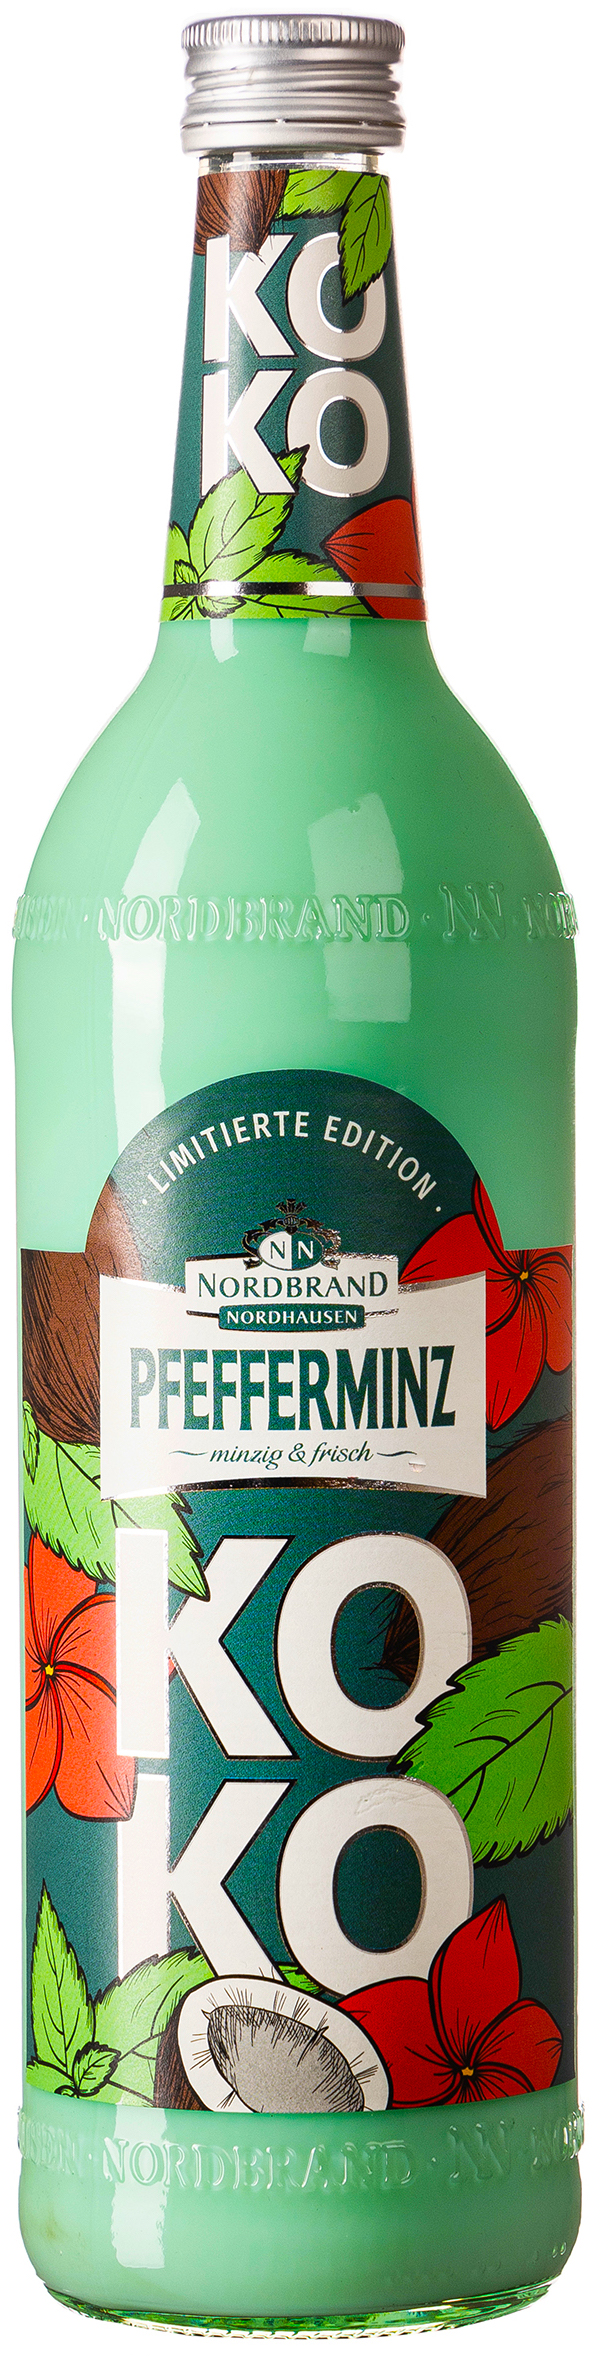 Nordbrand Hordhausen Pfefferminzlikör Kokos 15% vol. 0,7L